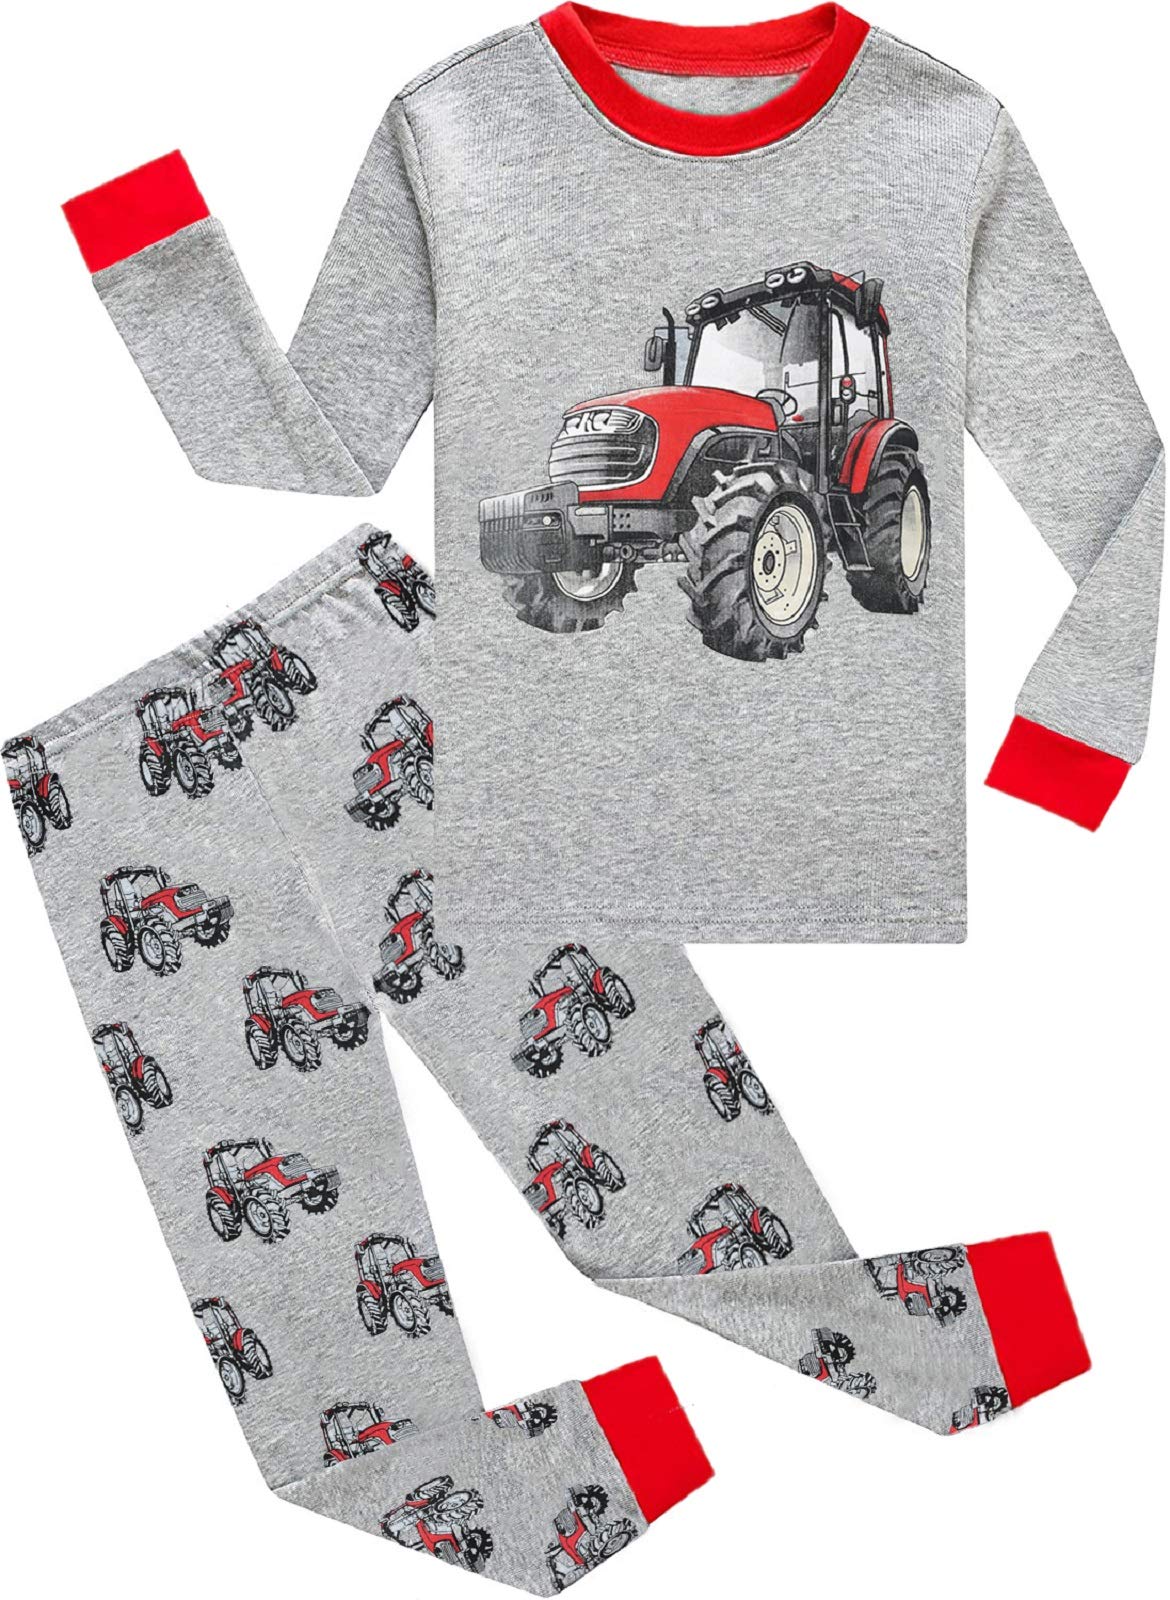 Little Hand Boys Pyjamas Set Tractor Cotton Toddler Long Sleeve Sleepwear Dinosaur Kids Pjs Nightwear Clothes Age 1-7 Years, 1# Tractor/Grey, 2-3 Years